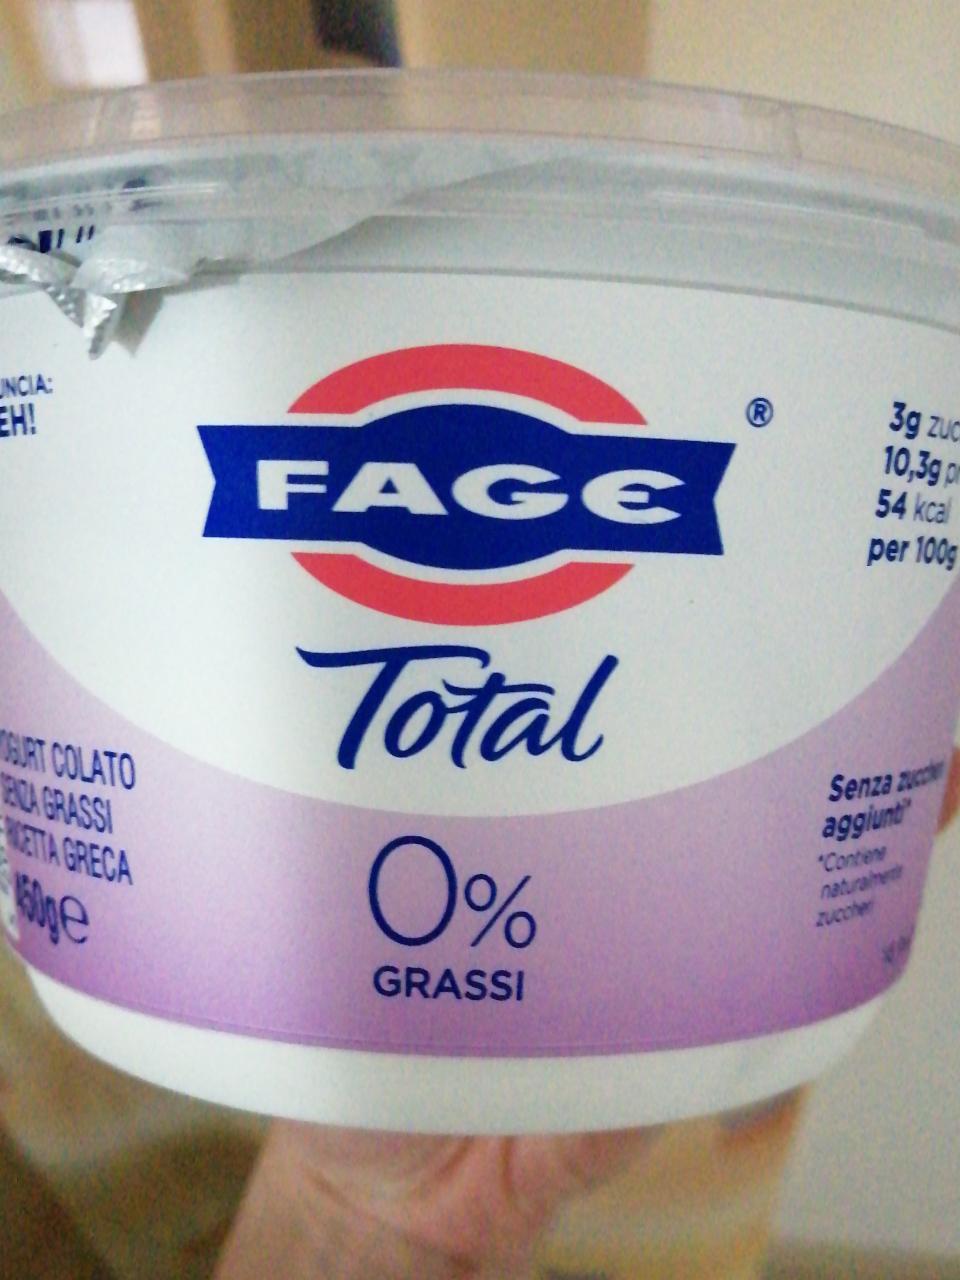 Fotografie - Total 0% grassi Fage